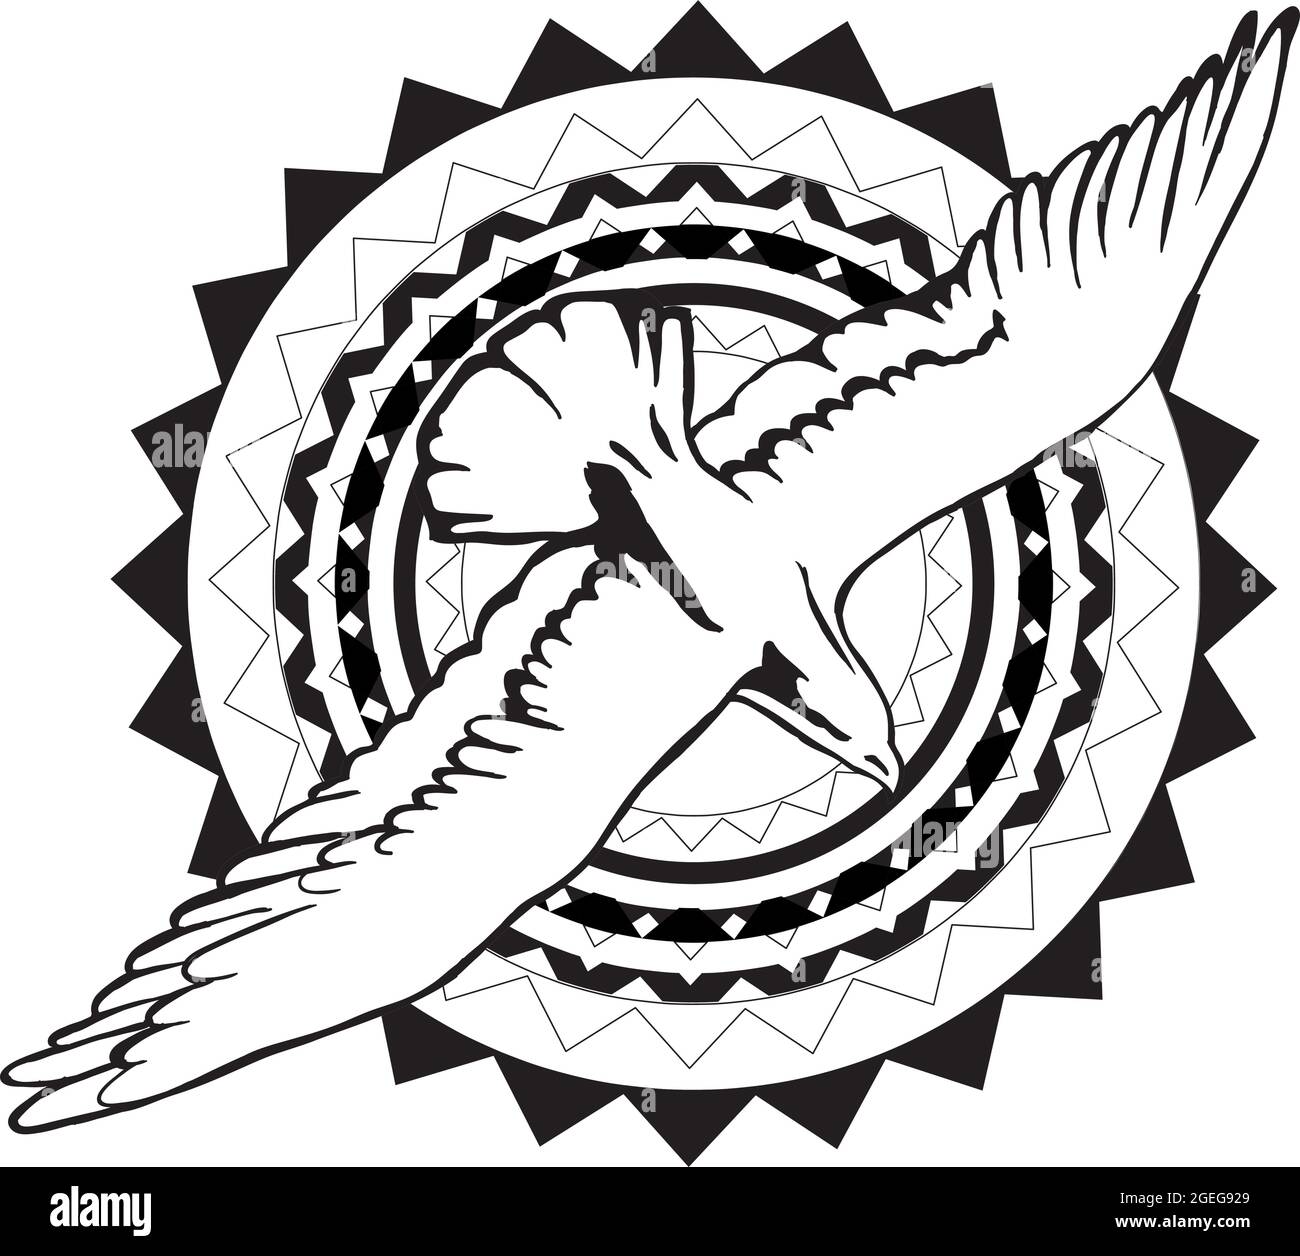 Albatross bird in a decorative circle, soaring seagull. Stock Vector